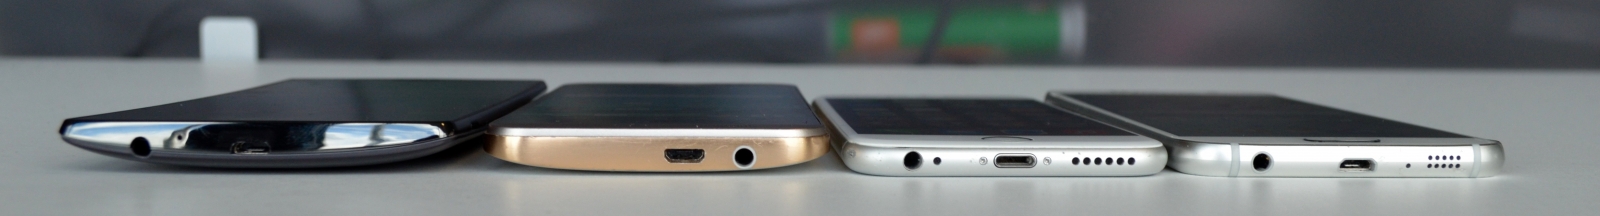 iPhone 6 Galaxy S6 One M9 G4